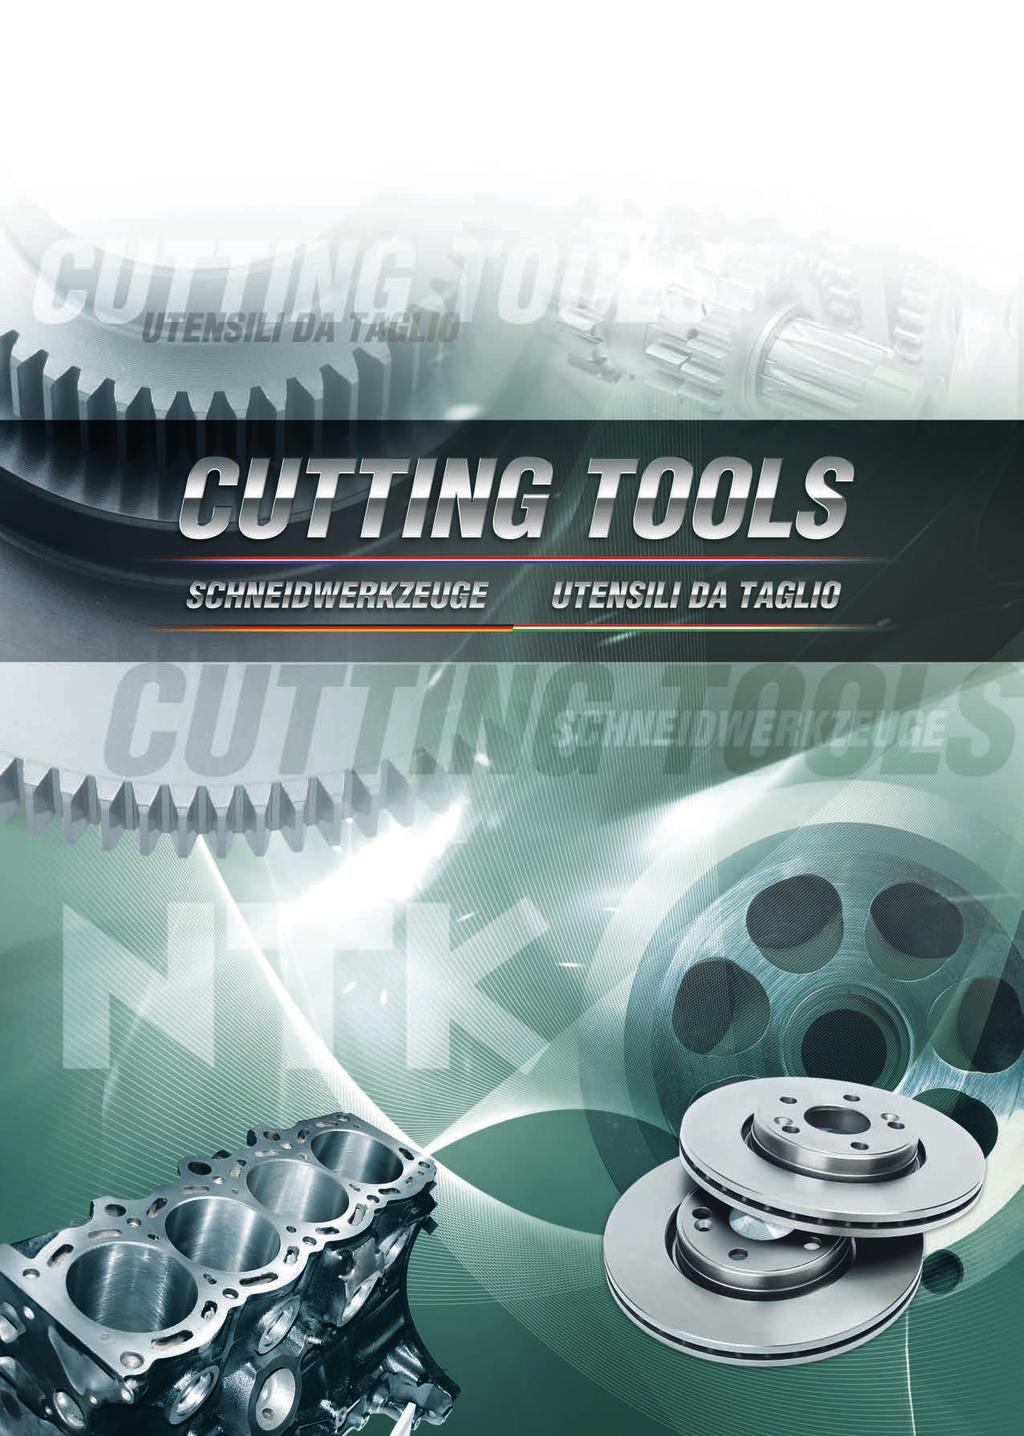 NGK SPARK PLUGS (U.S.A), INC. Cutting Tool Sales Office 46929 Magellan Dr.